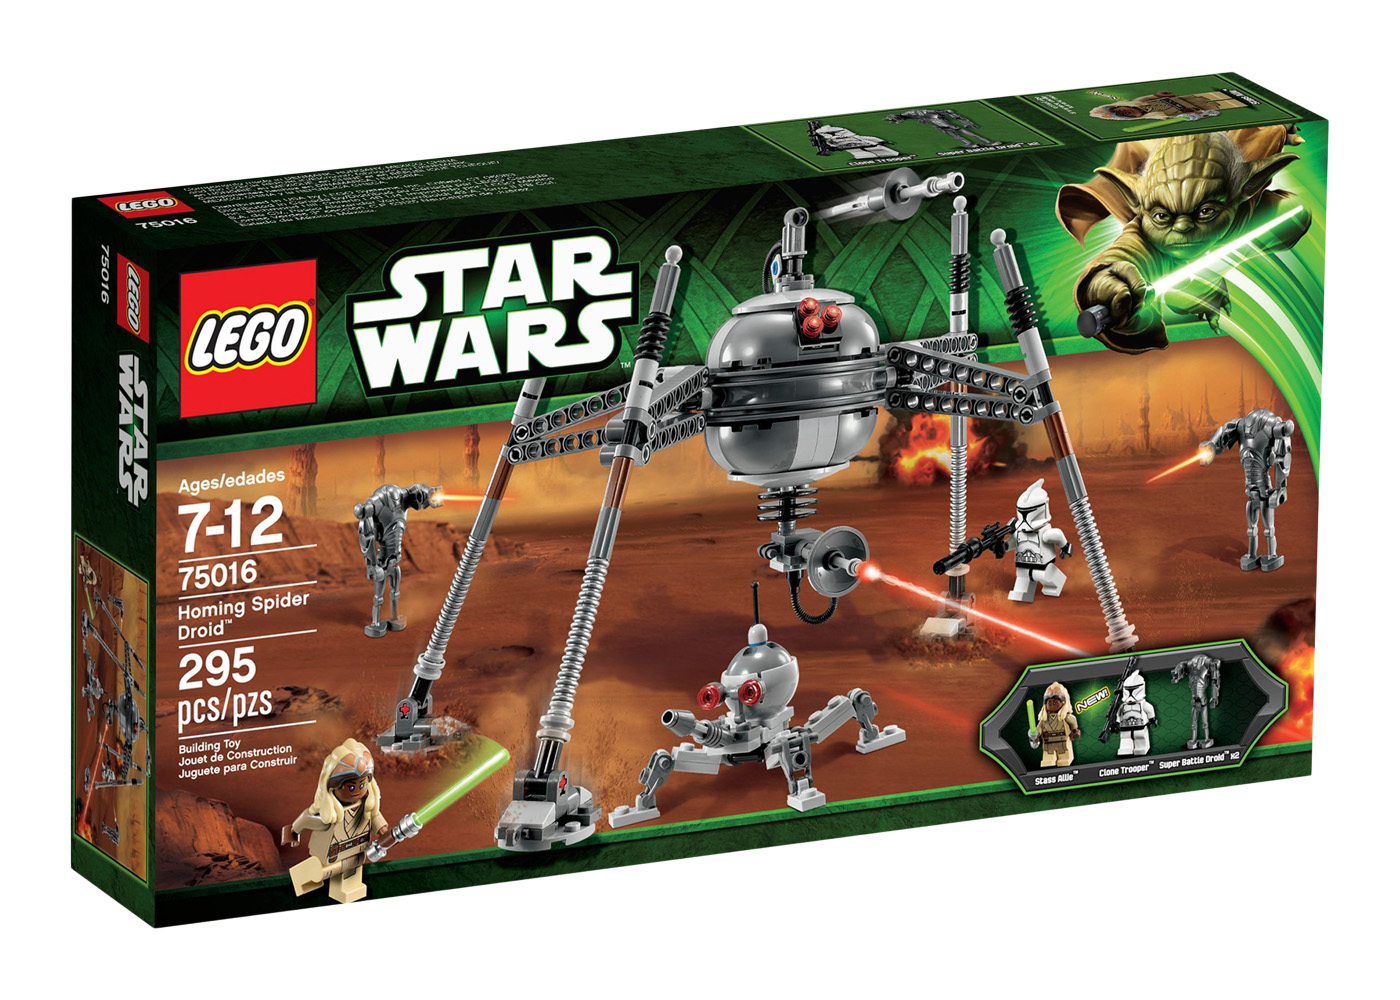 LEGO Star Wars Homing Spider Droid Set 75016